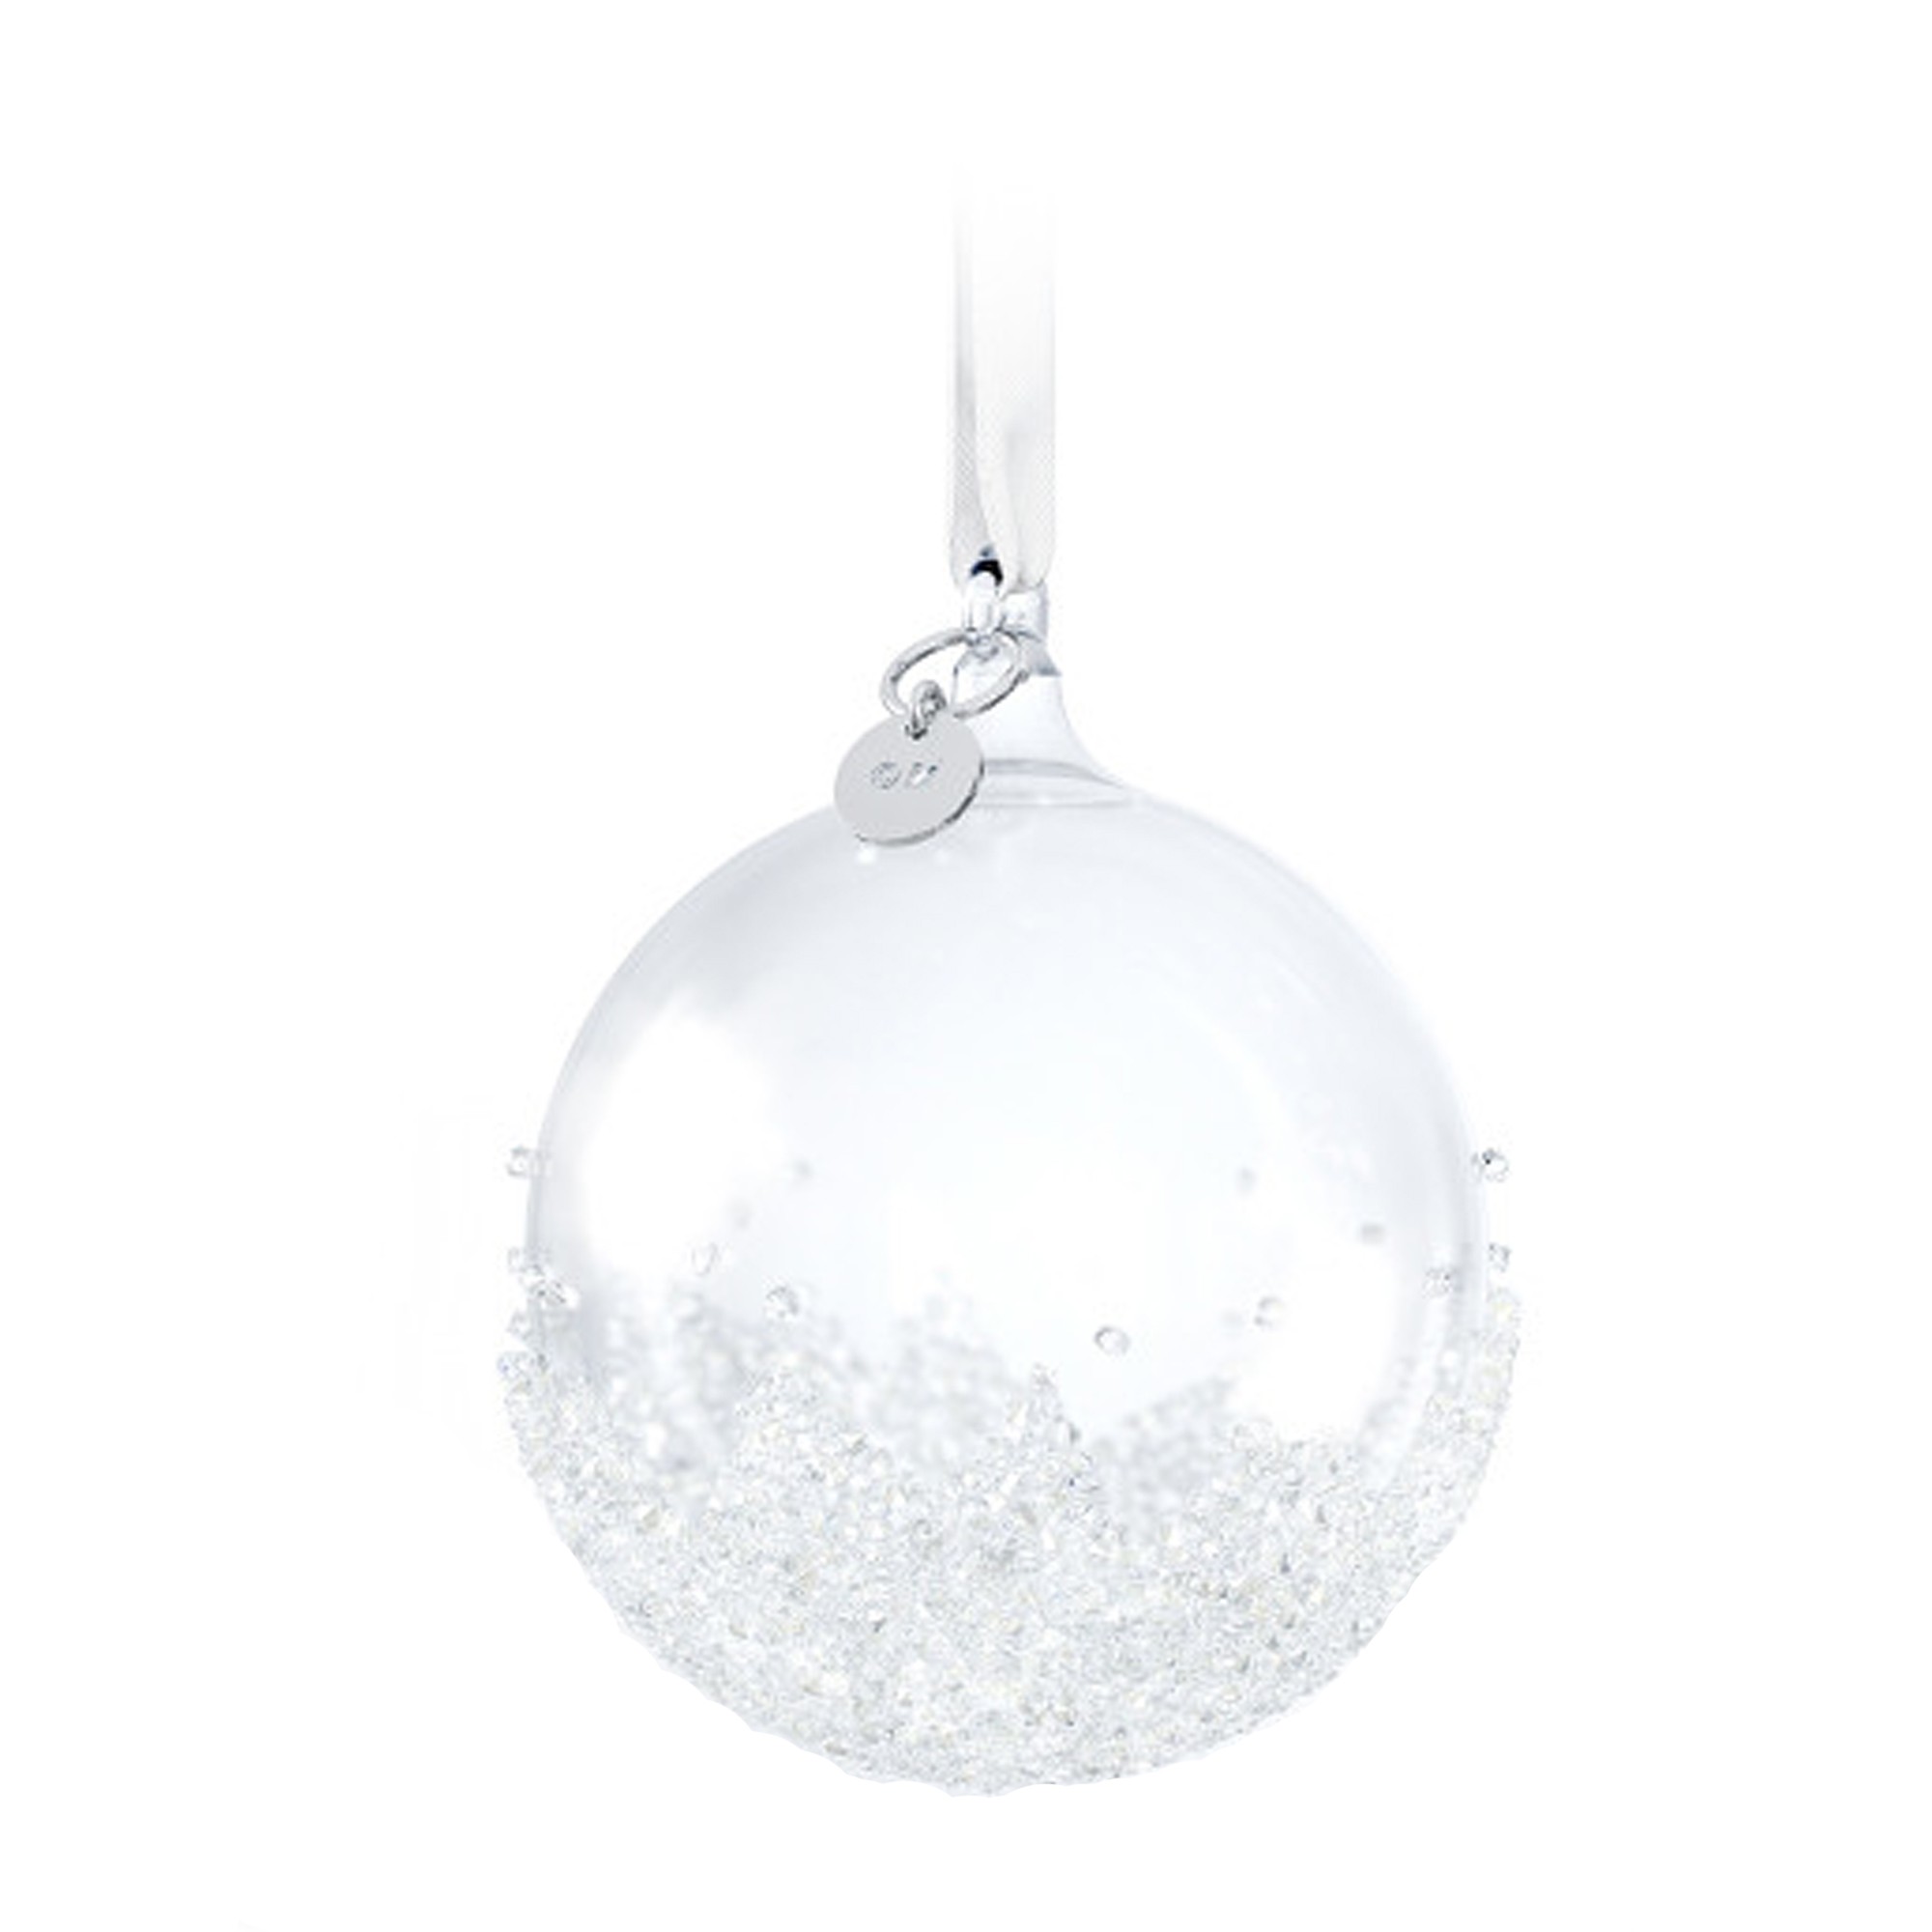 Swarovski Crystal Small Christmas Ball Ornament